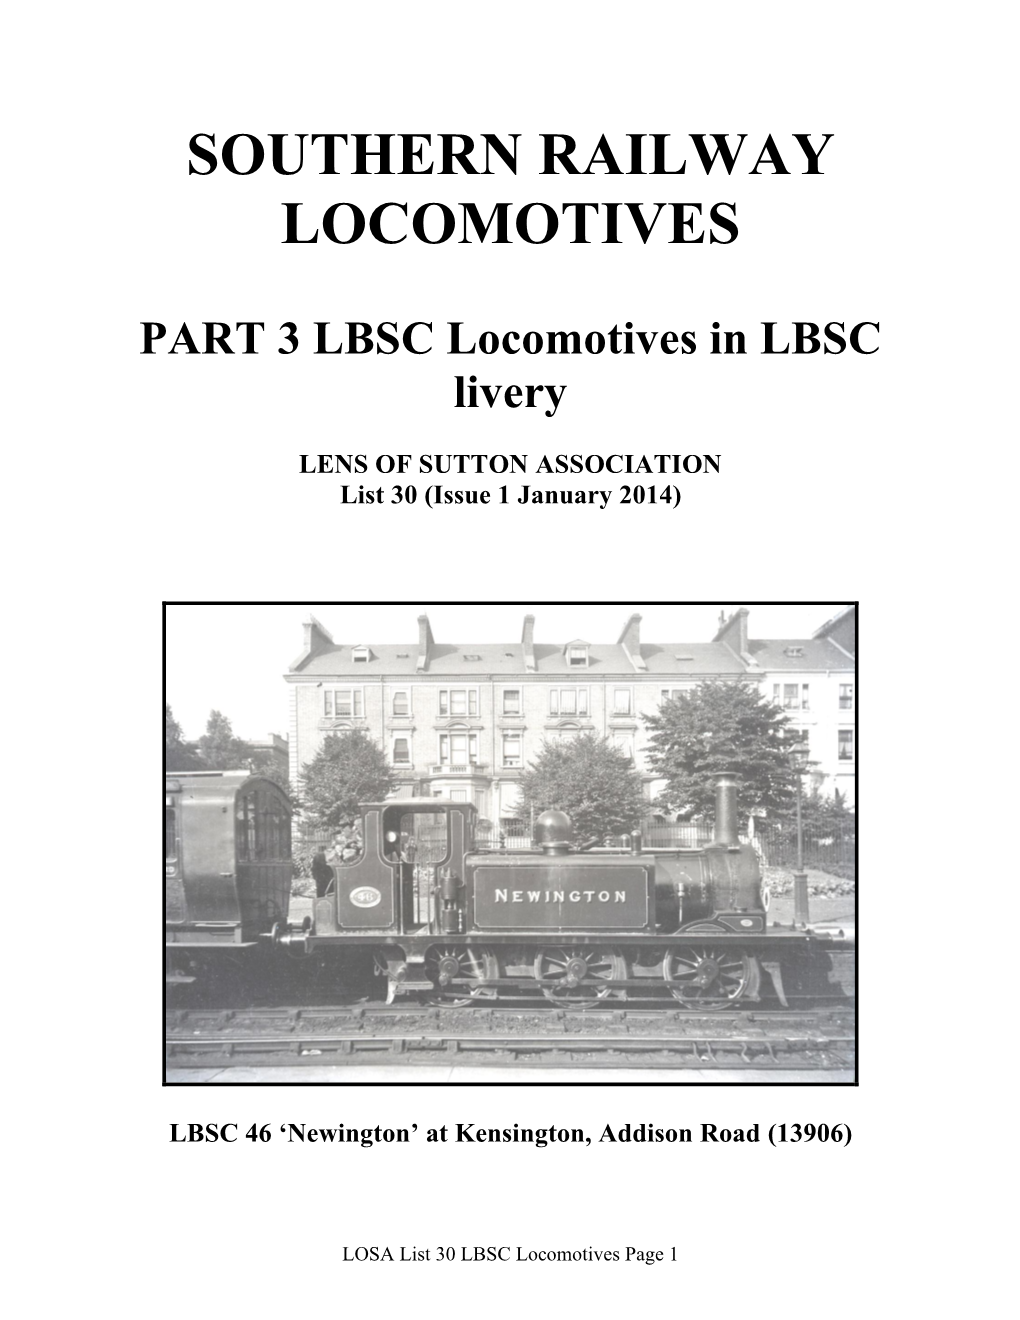 Southern Railway Locomotives